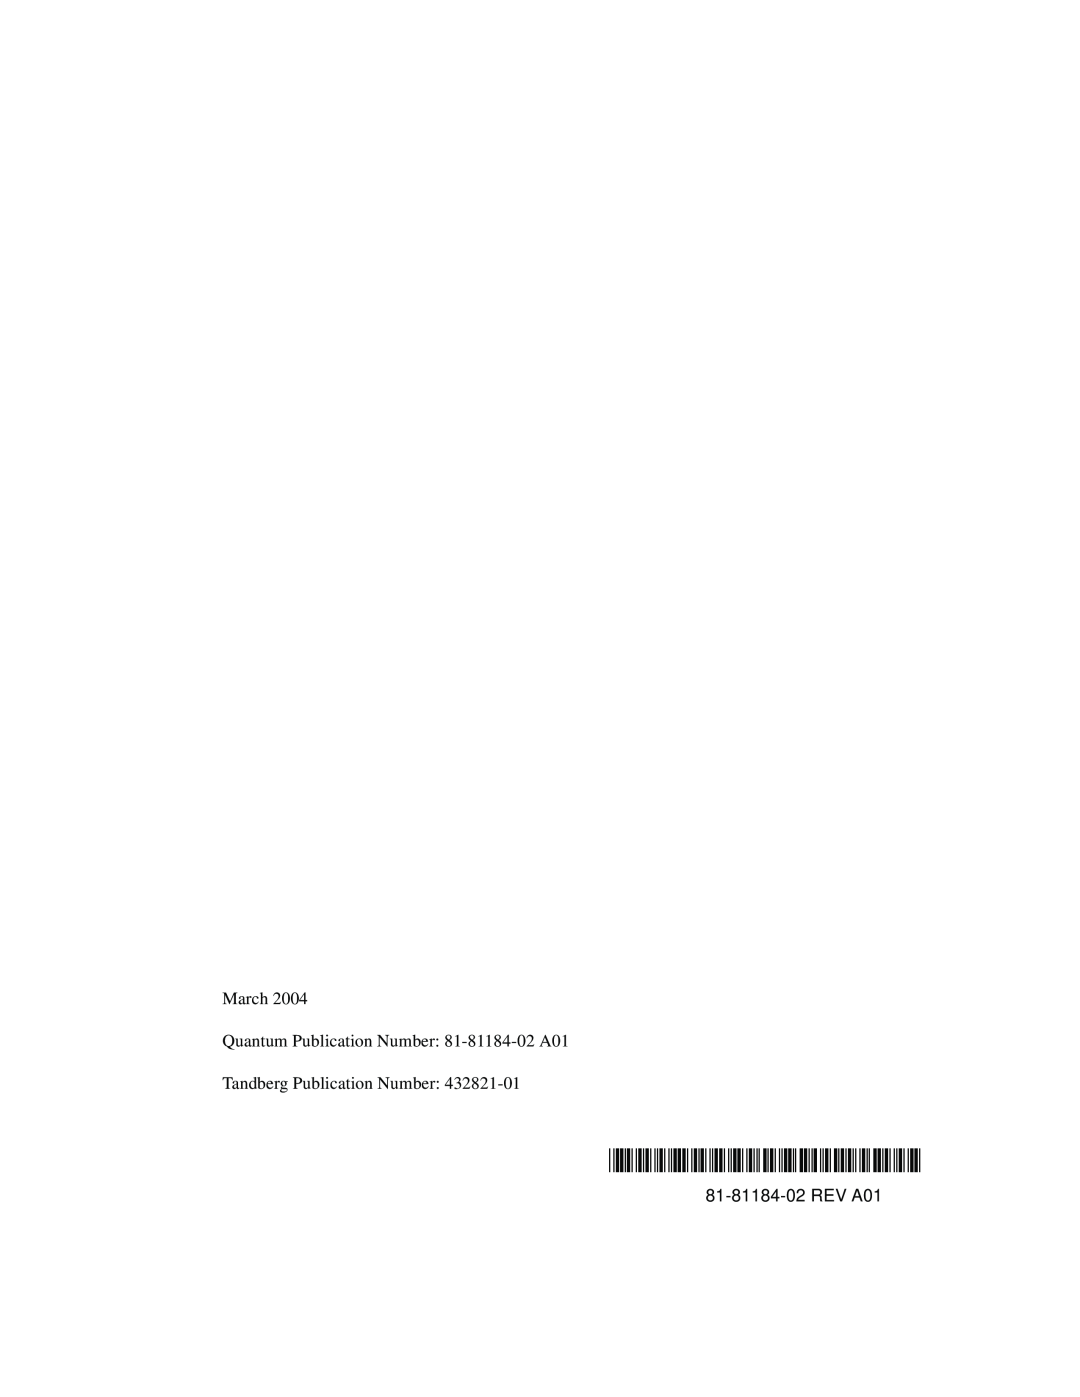 Tandberg Data 600 manual March Quantum Publication Number 81-81184-02 A01, Tandberg Publication Number, REV A01 